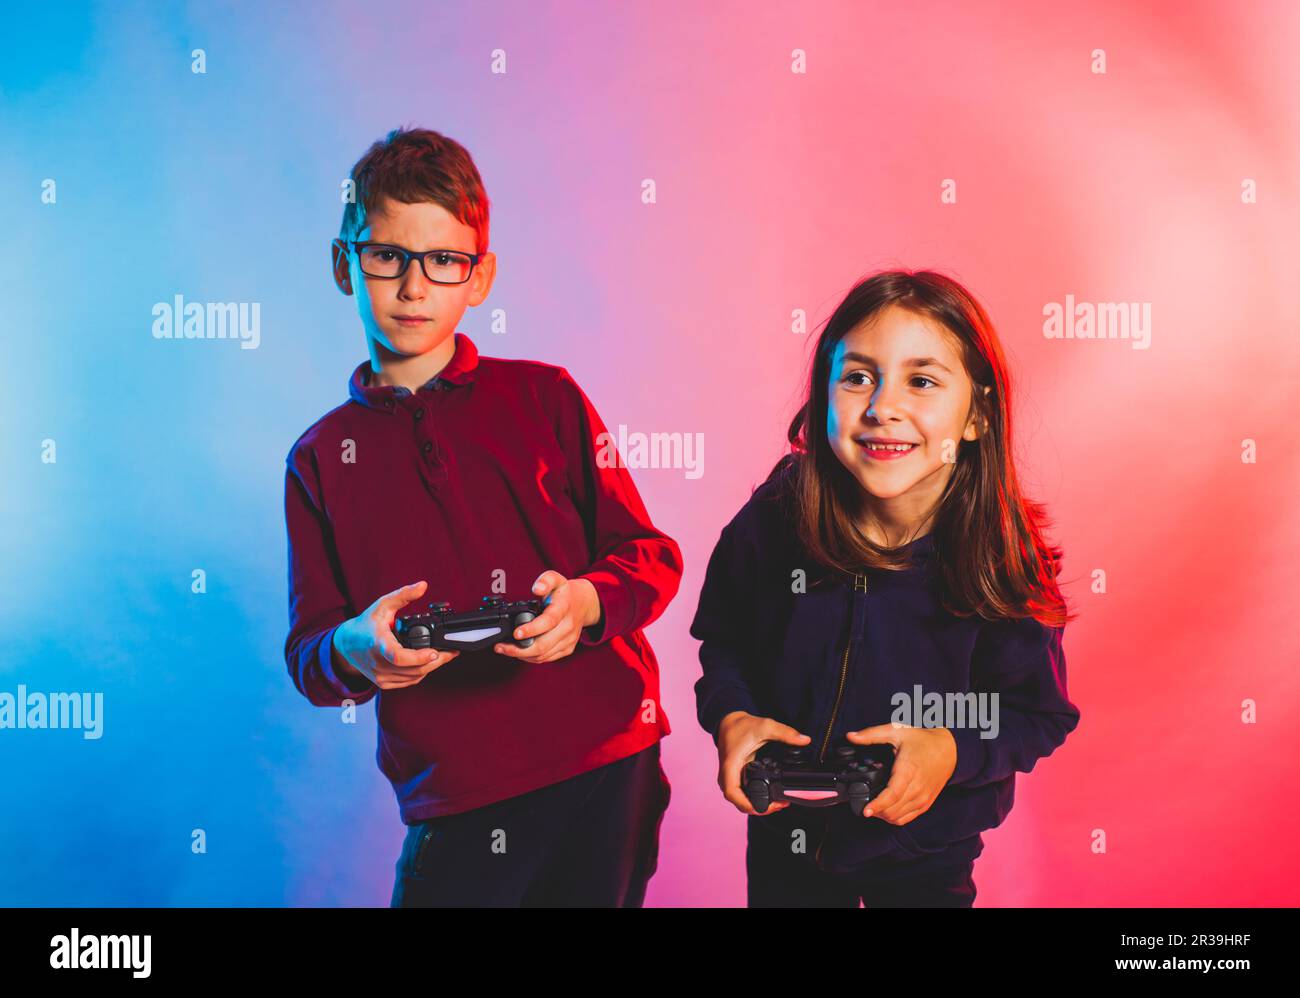 Emotional girl and boy playing virtual game Stock Photo